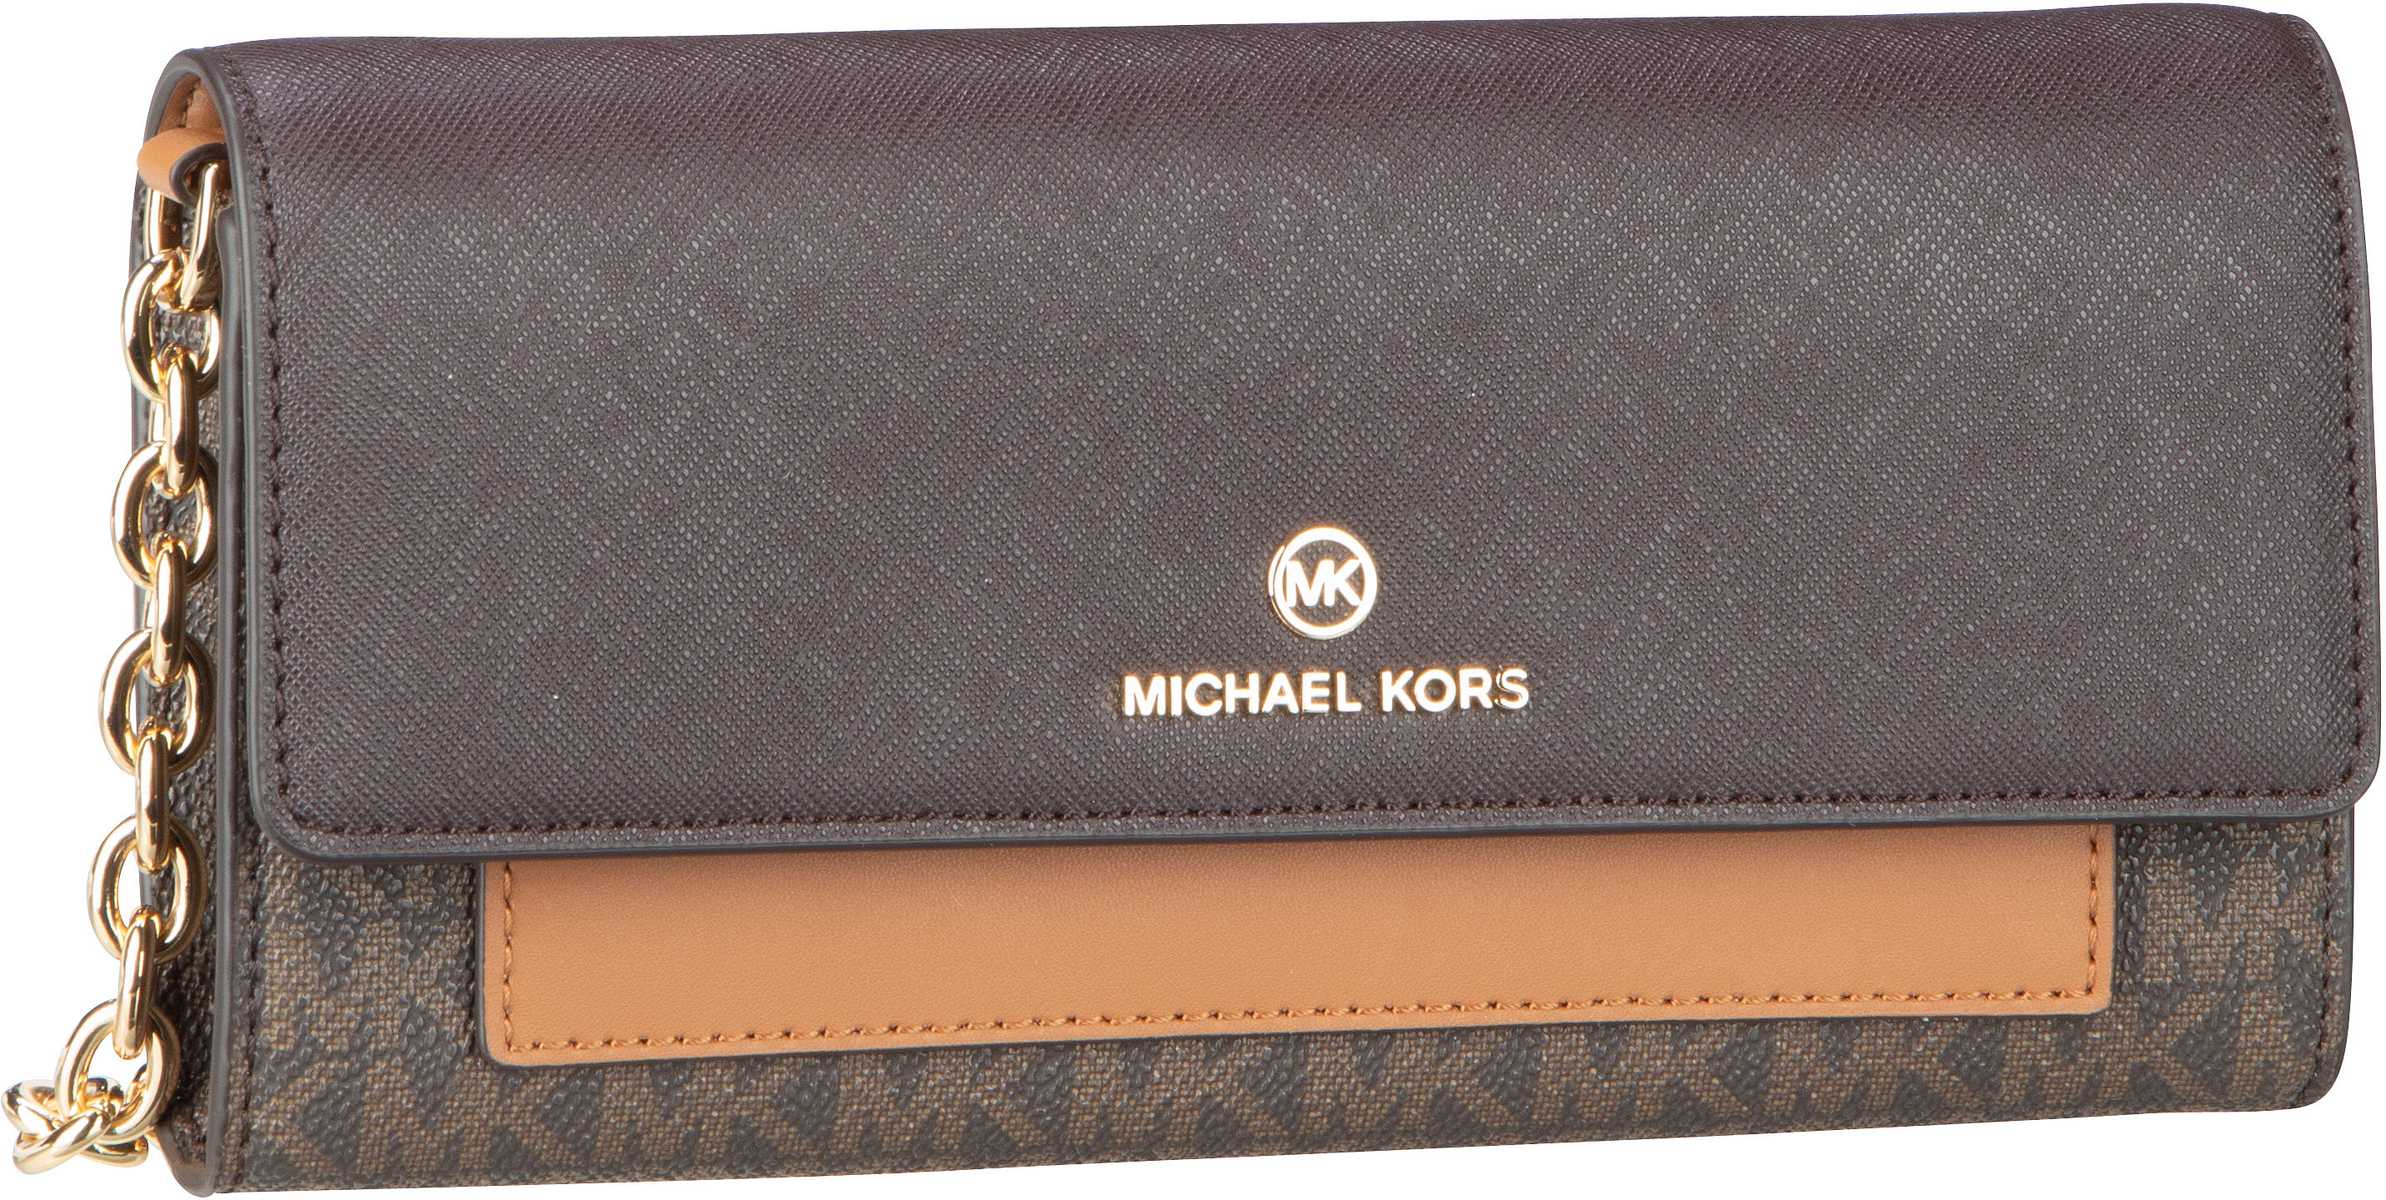 Michael Kors Jet Set Charm Medium 2in1 Wallet Chain Xbody MK Signature - Brown/Acorn